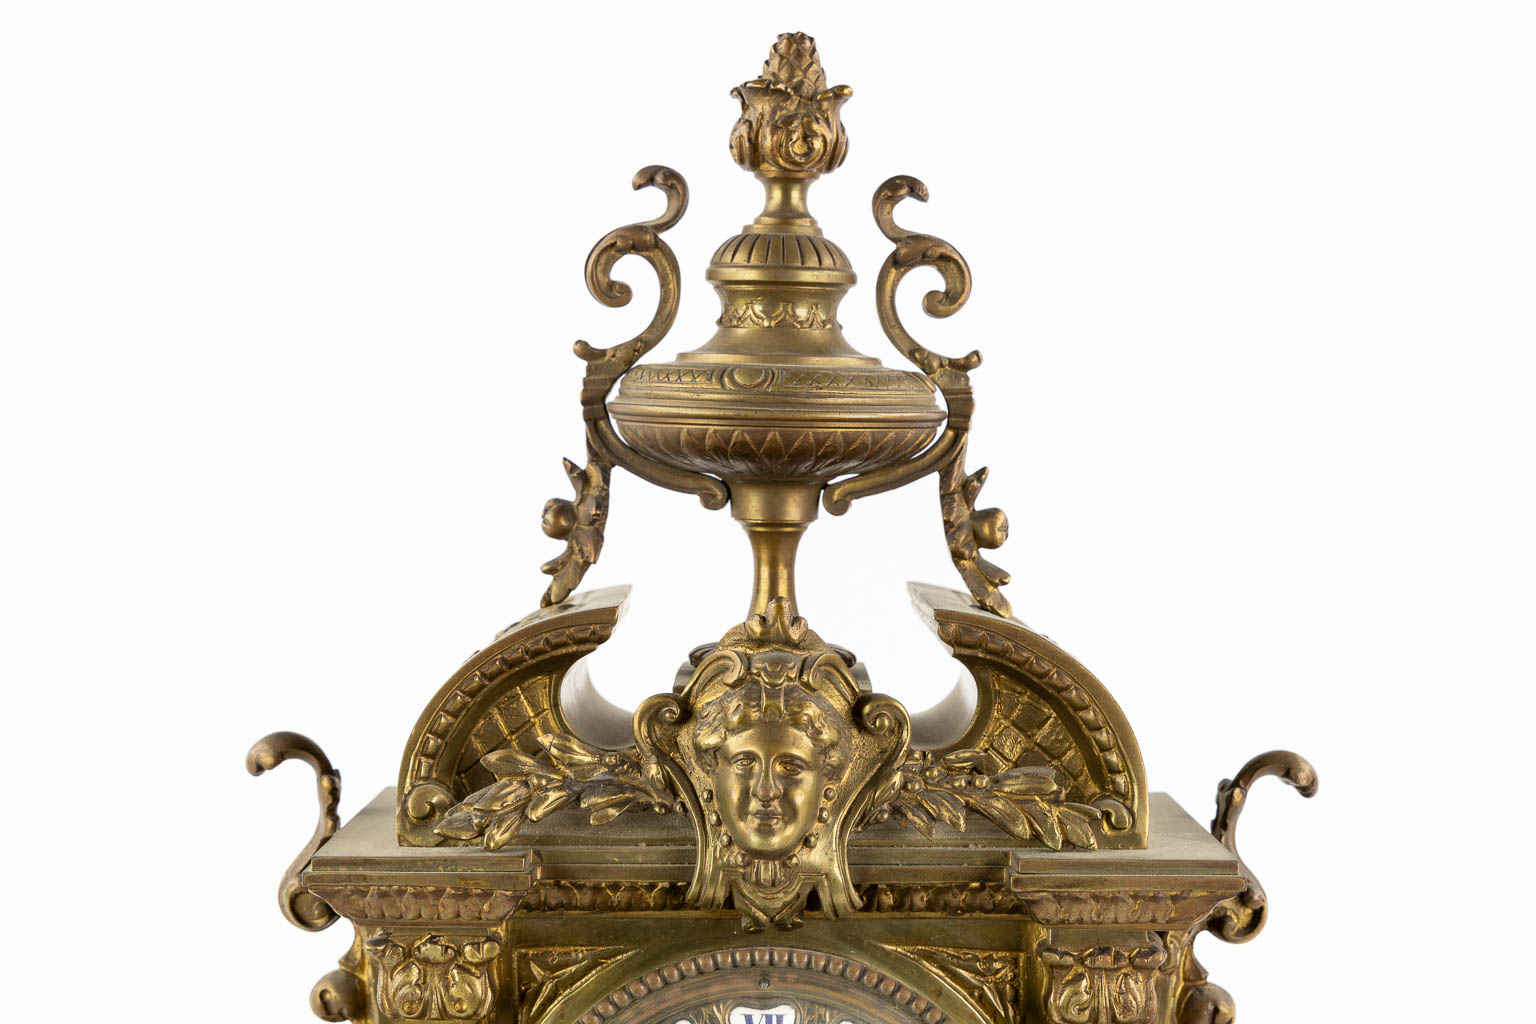 A three-piece mantle garniture clock and candelabra, patinated bronze. (L:16 x W:33 x H:50 cm)